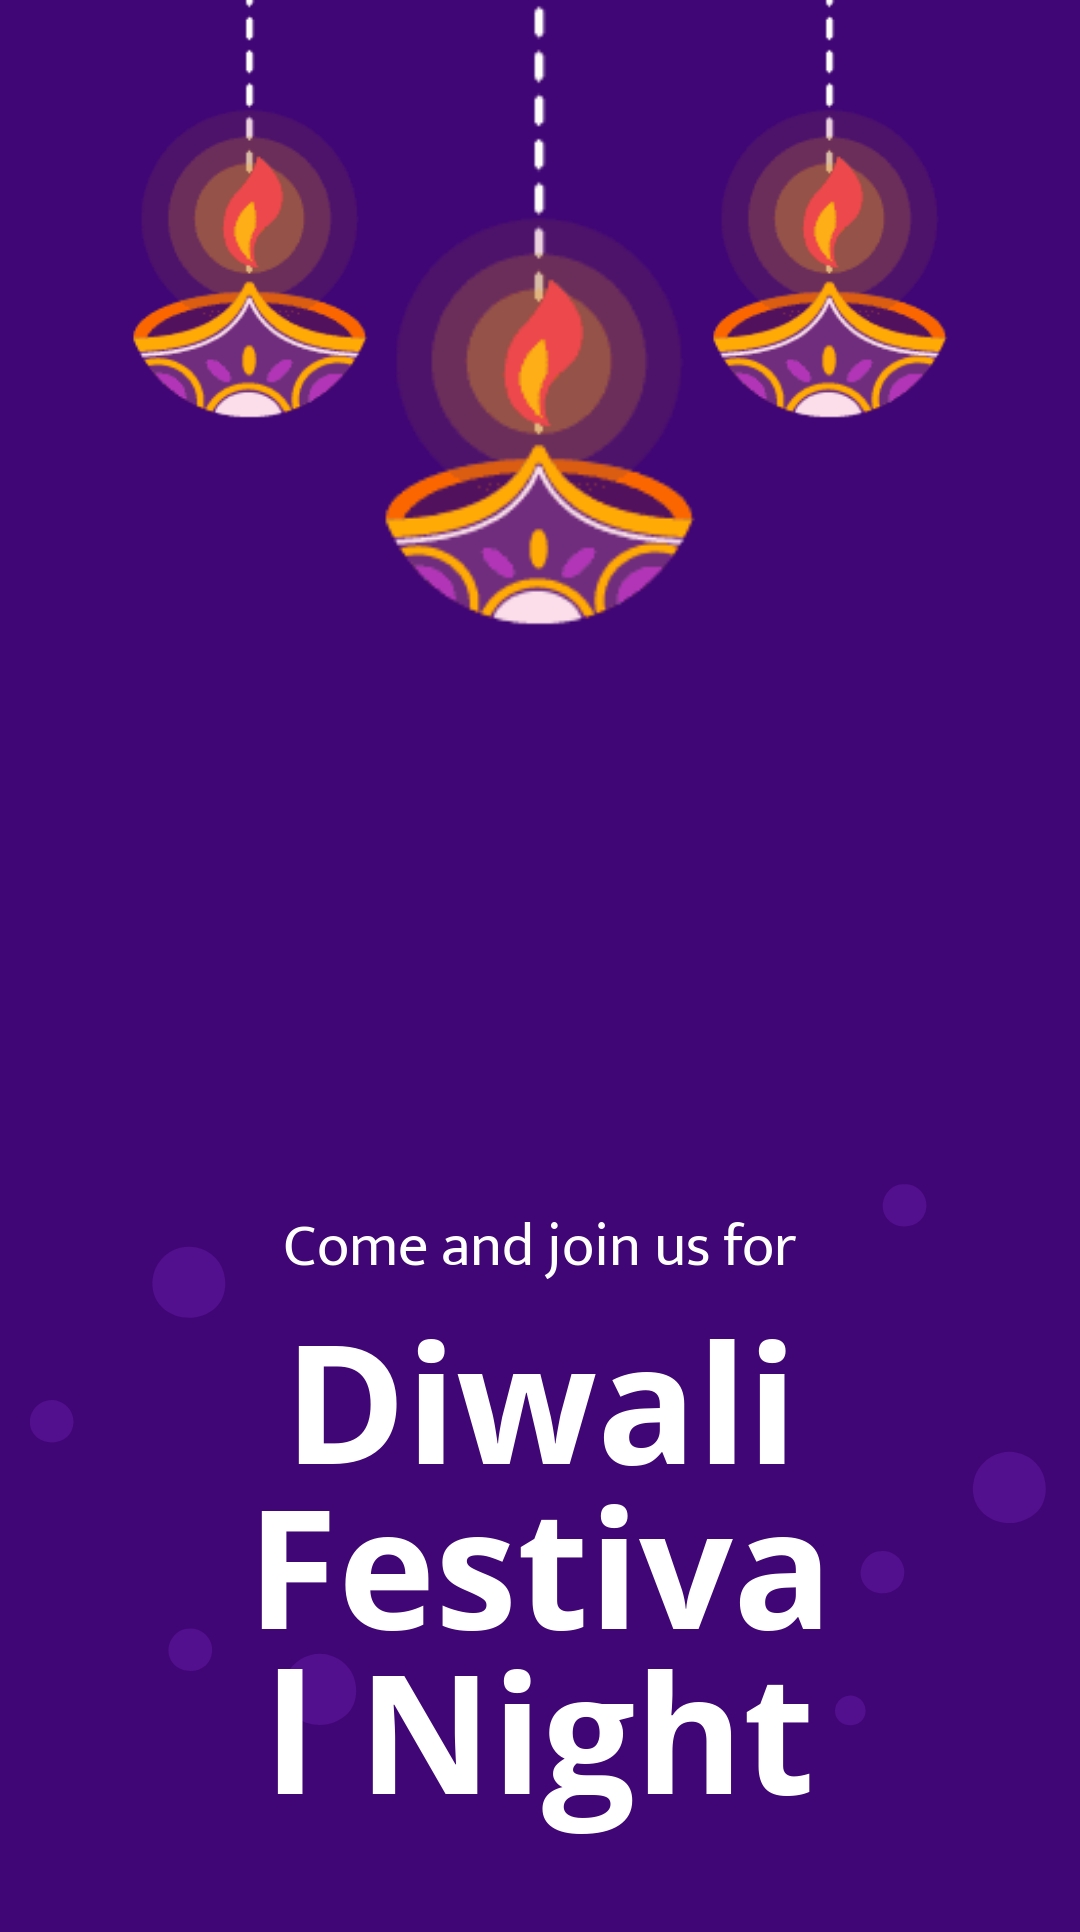 Diwali Festival Event Snapchat Geofilter Template